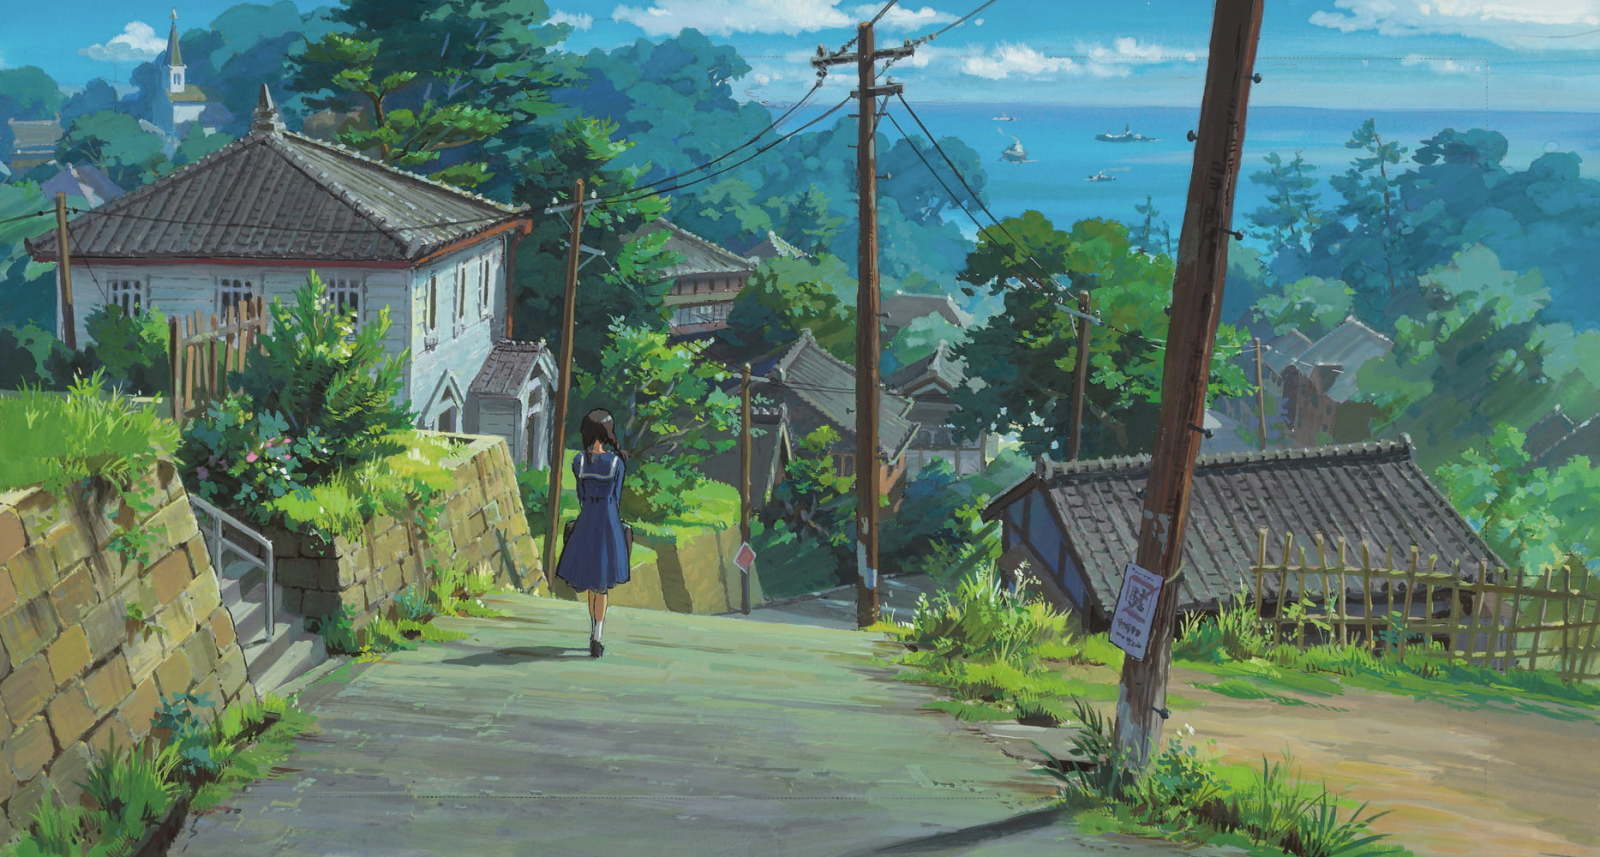 Anime Landscape - Original image